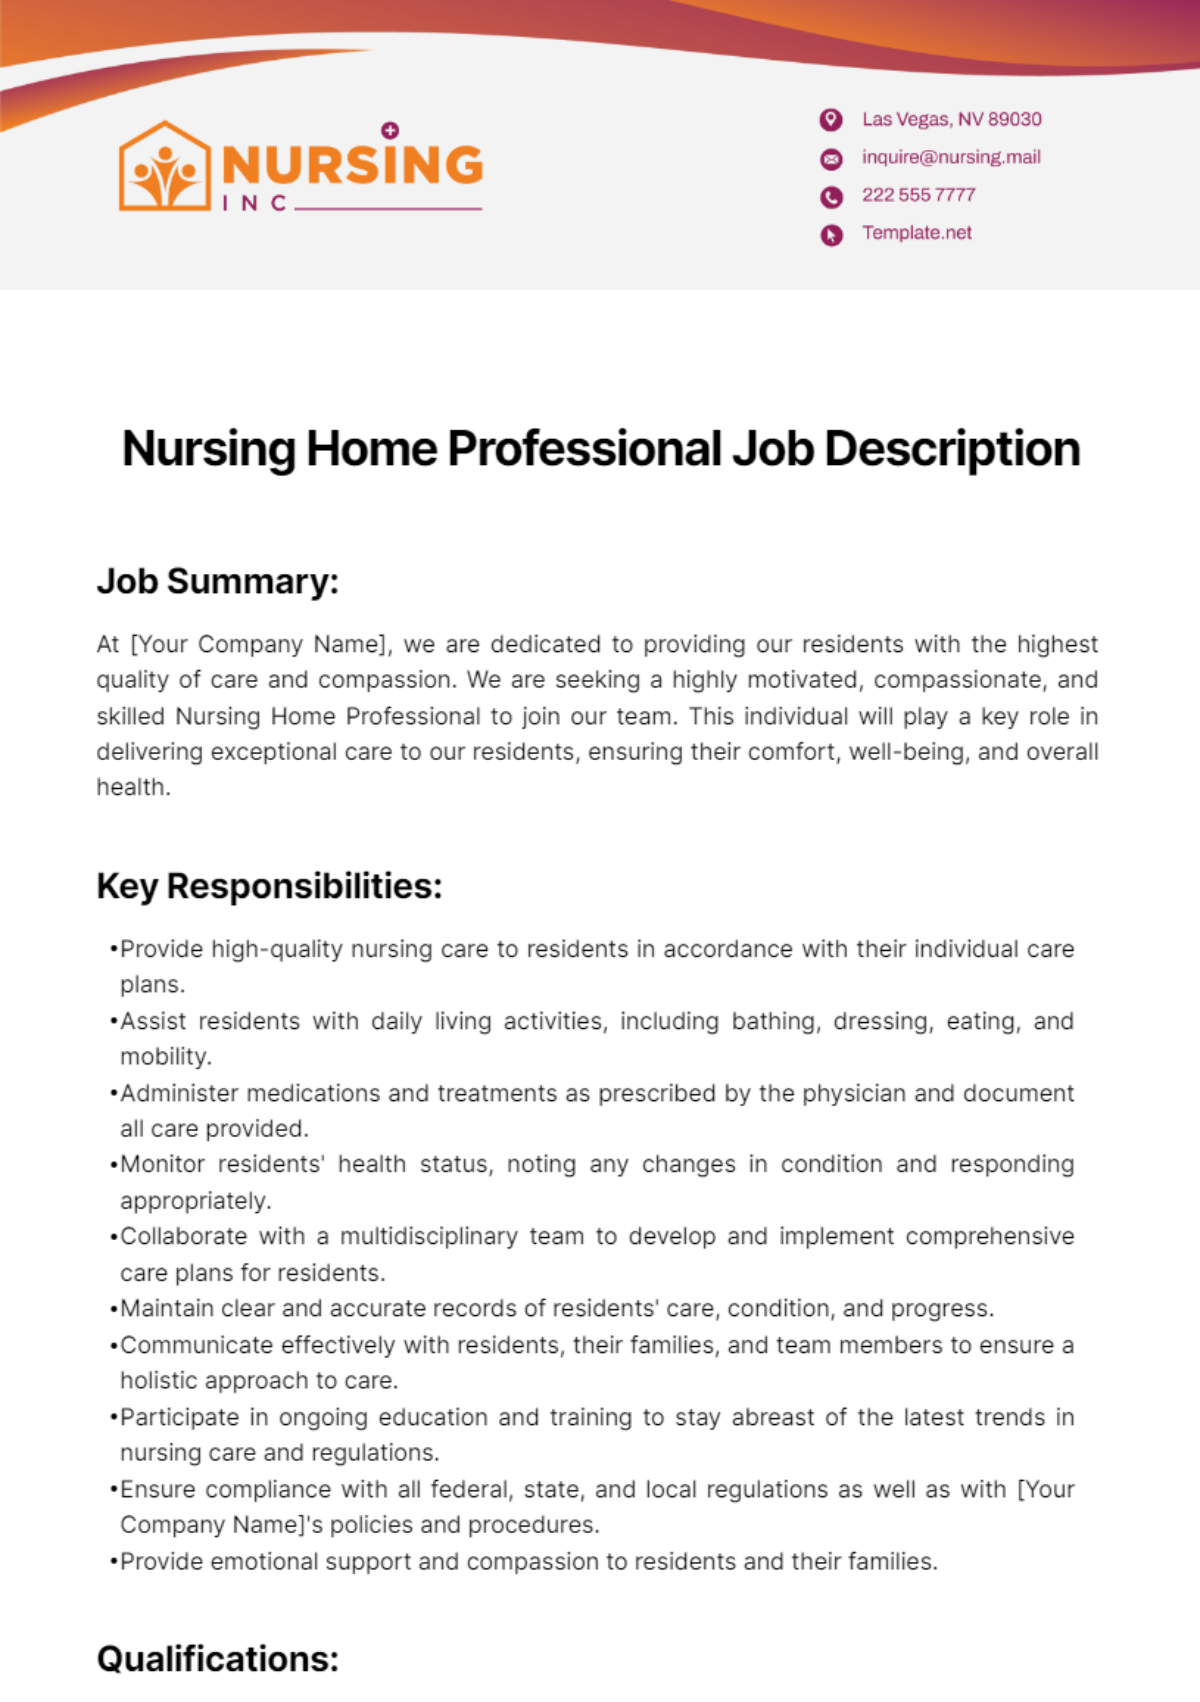 Nursing Home Professional Job Description Template